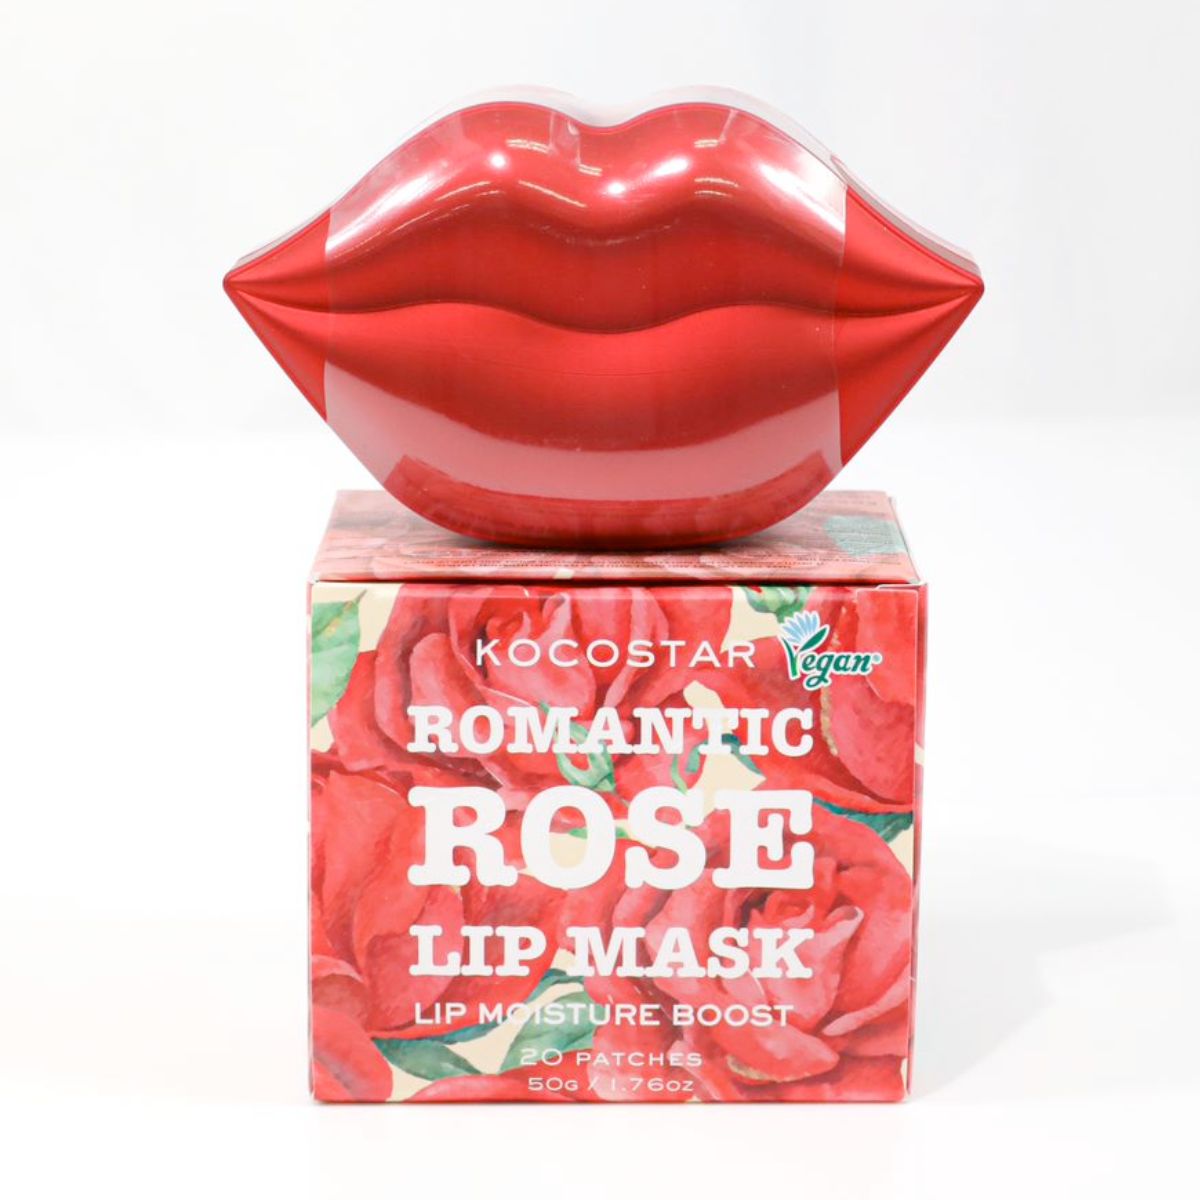 KOCOSTAR LIP MASK ROMANTIC ROSE JAR – 20 PATCHES - skin care